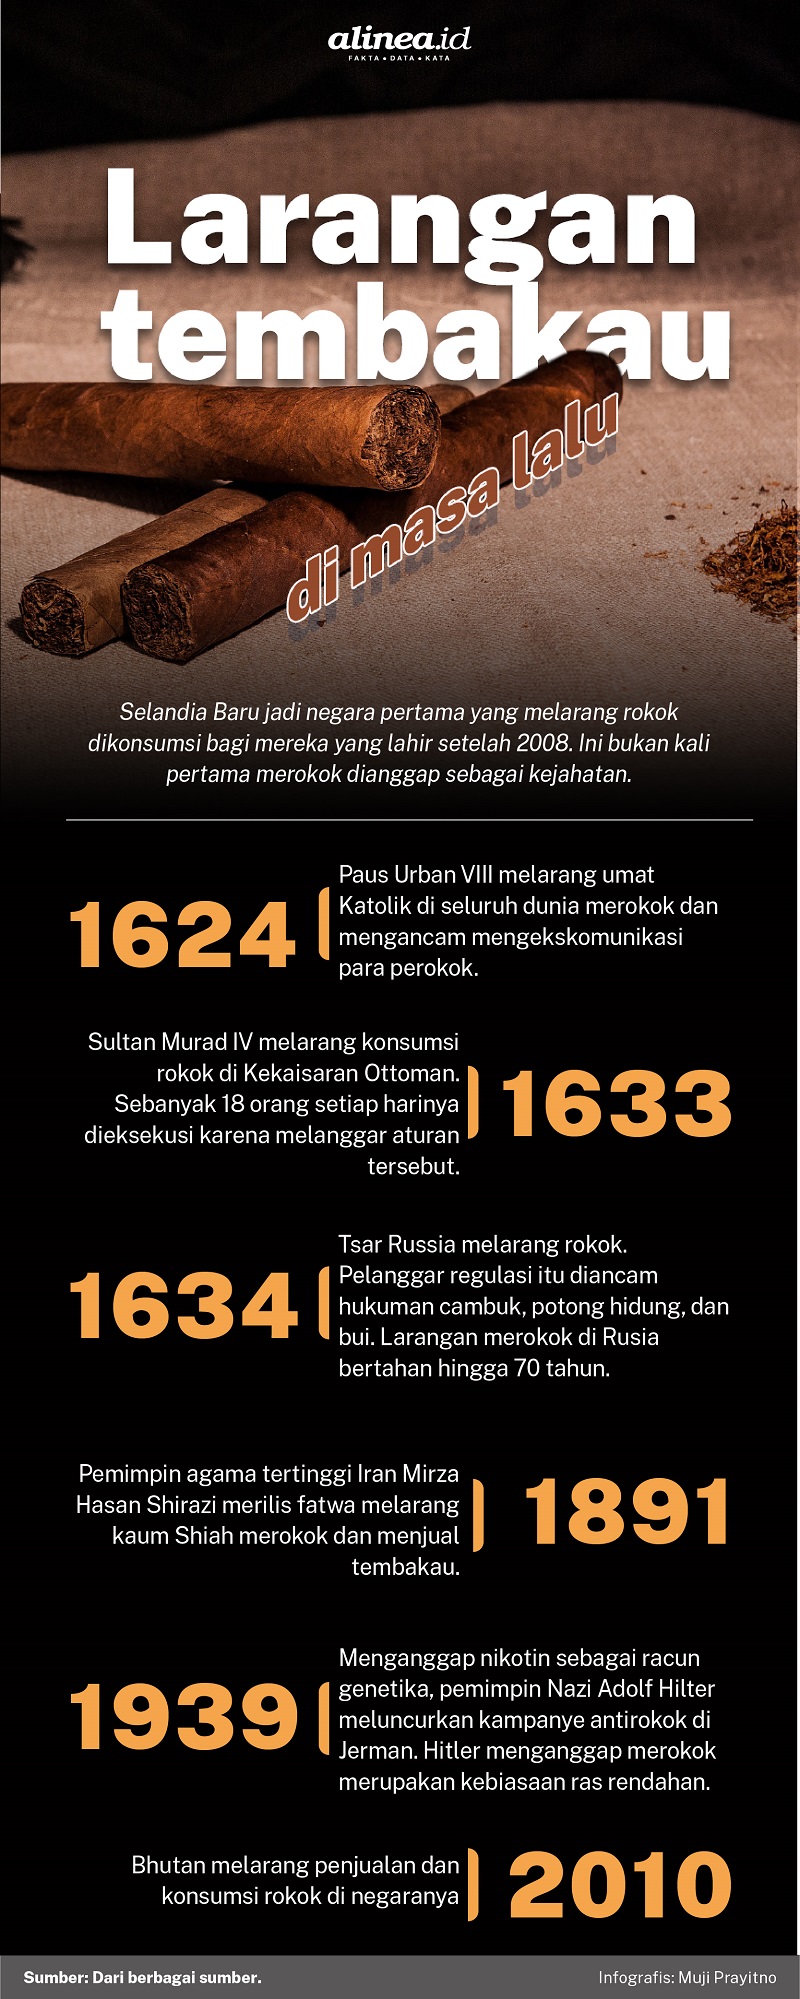 Infografik Alinea.id/Muji Prayitno